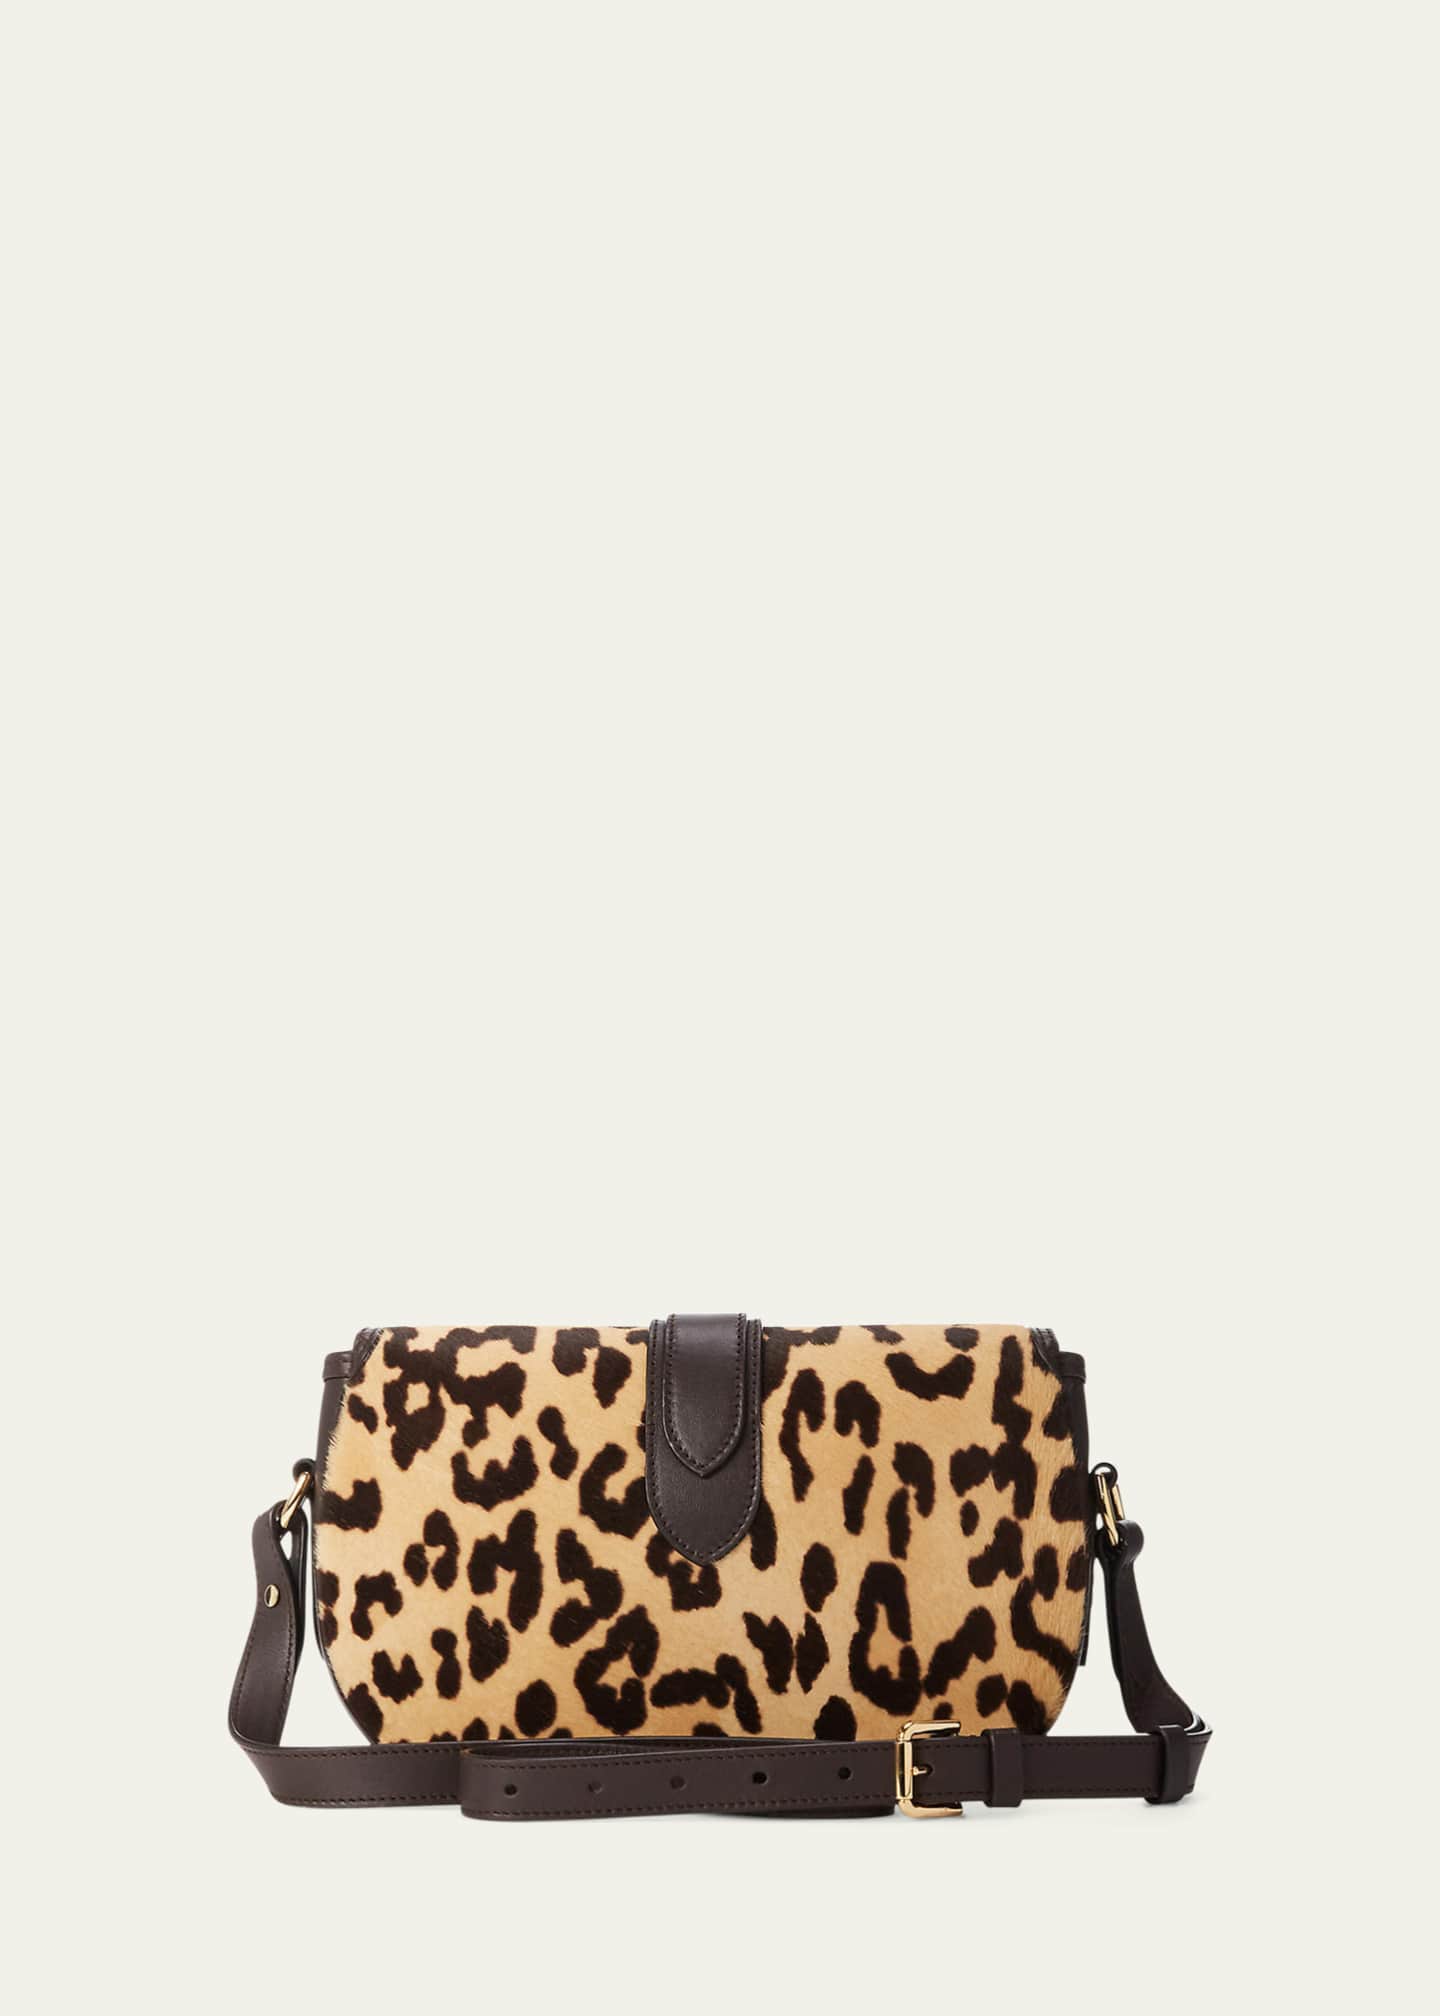 Ralph Lauren Welington Leopard Calf Hair Shoulder Bag